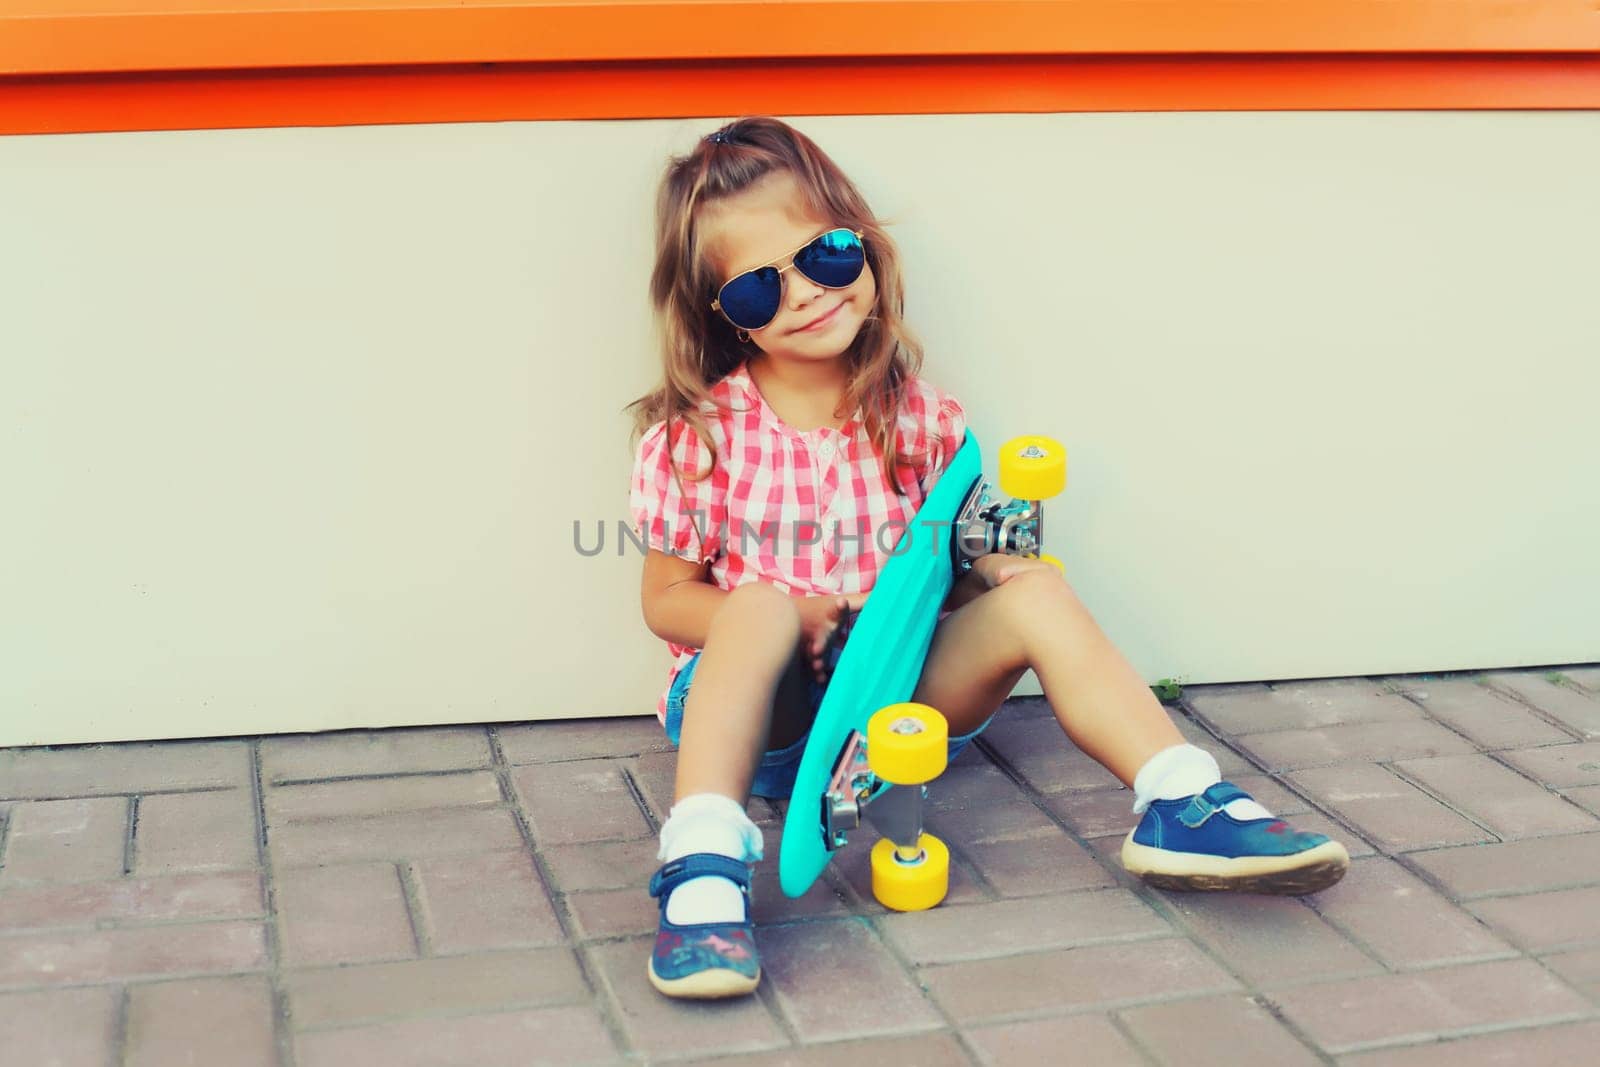 Portrait of stylish little girl child posing with skateboard on city street